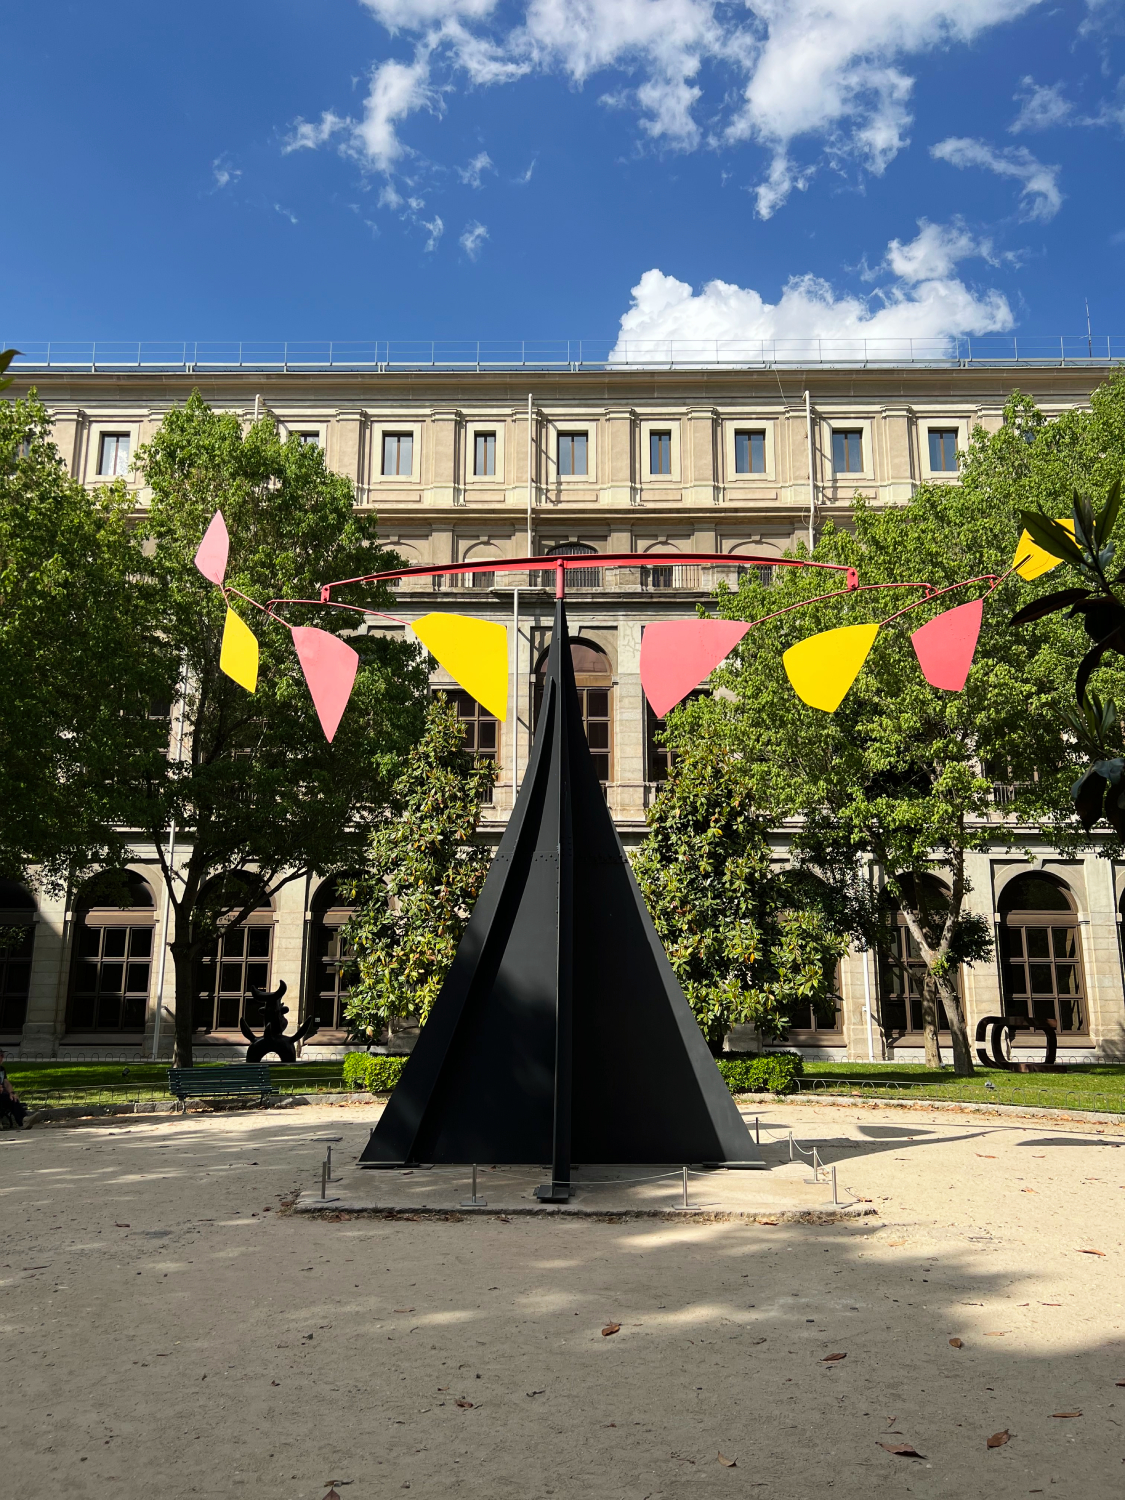 Calder Sculpture, Reina Sofía, Madrid, Spain